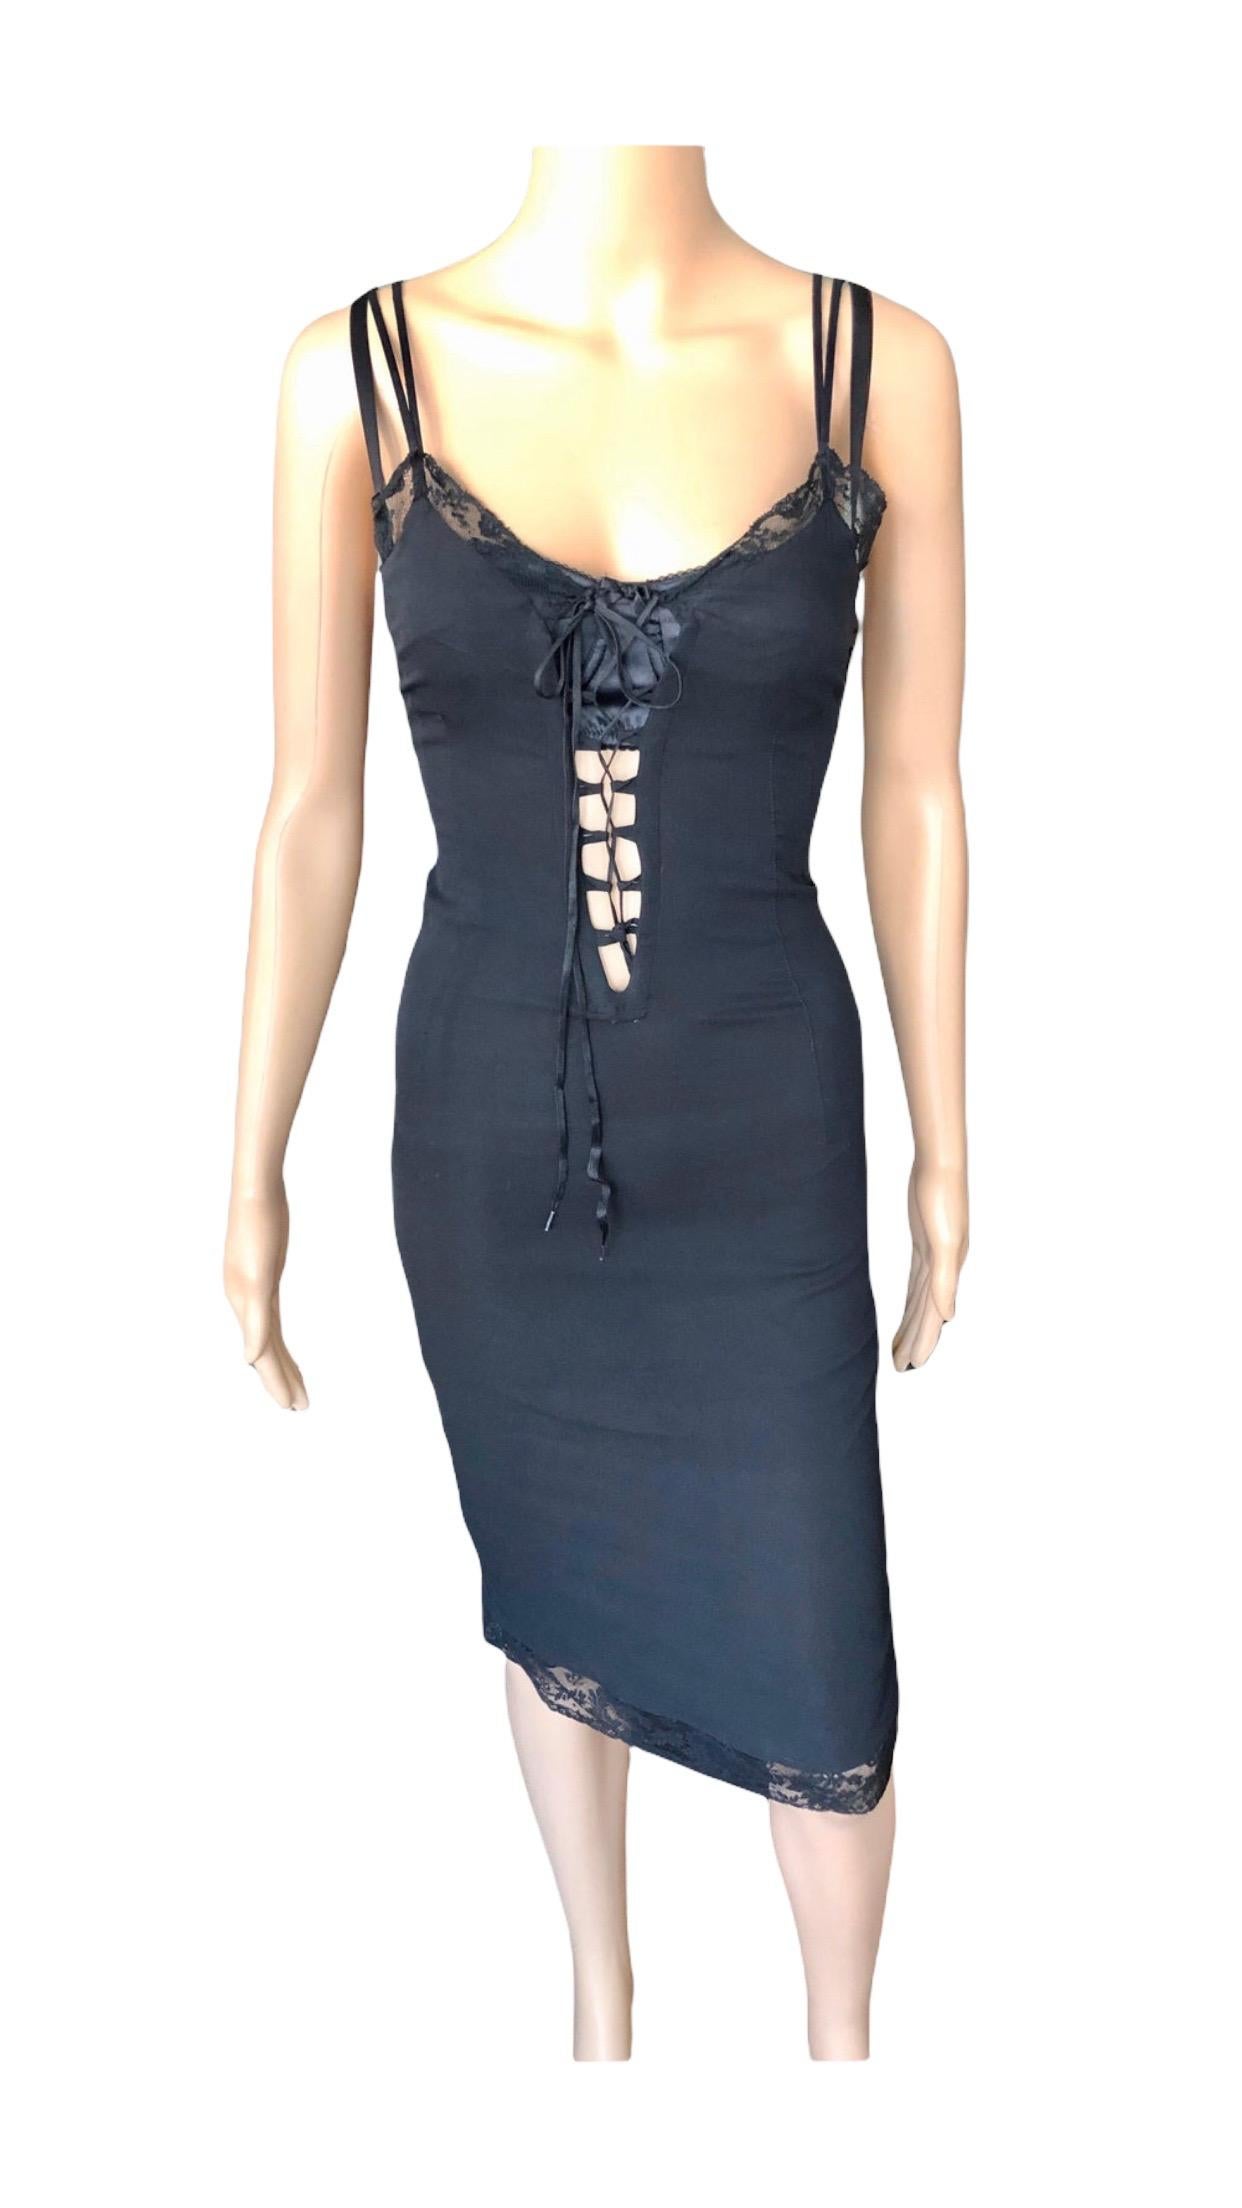 D&G by Dolce & Gabbana c. 2001 Corset Lace Up Bra Black Dress For Sale 1